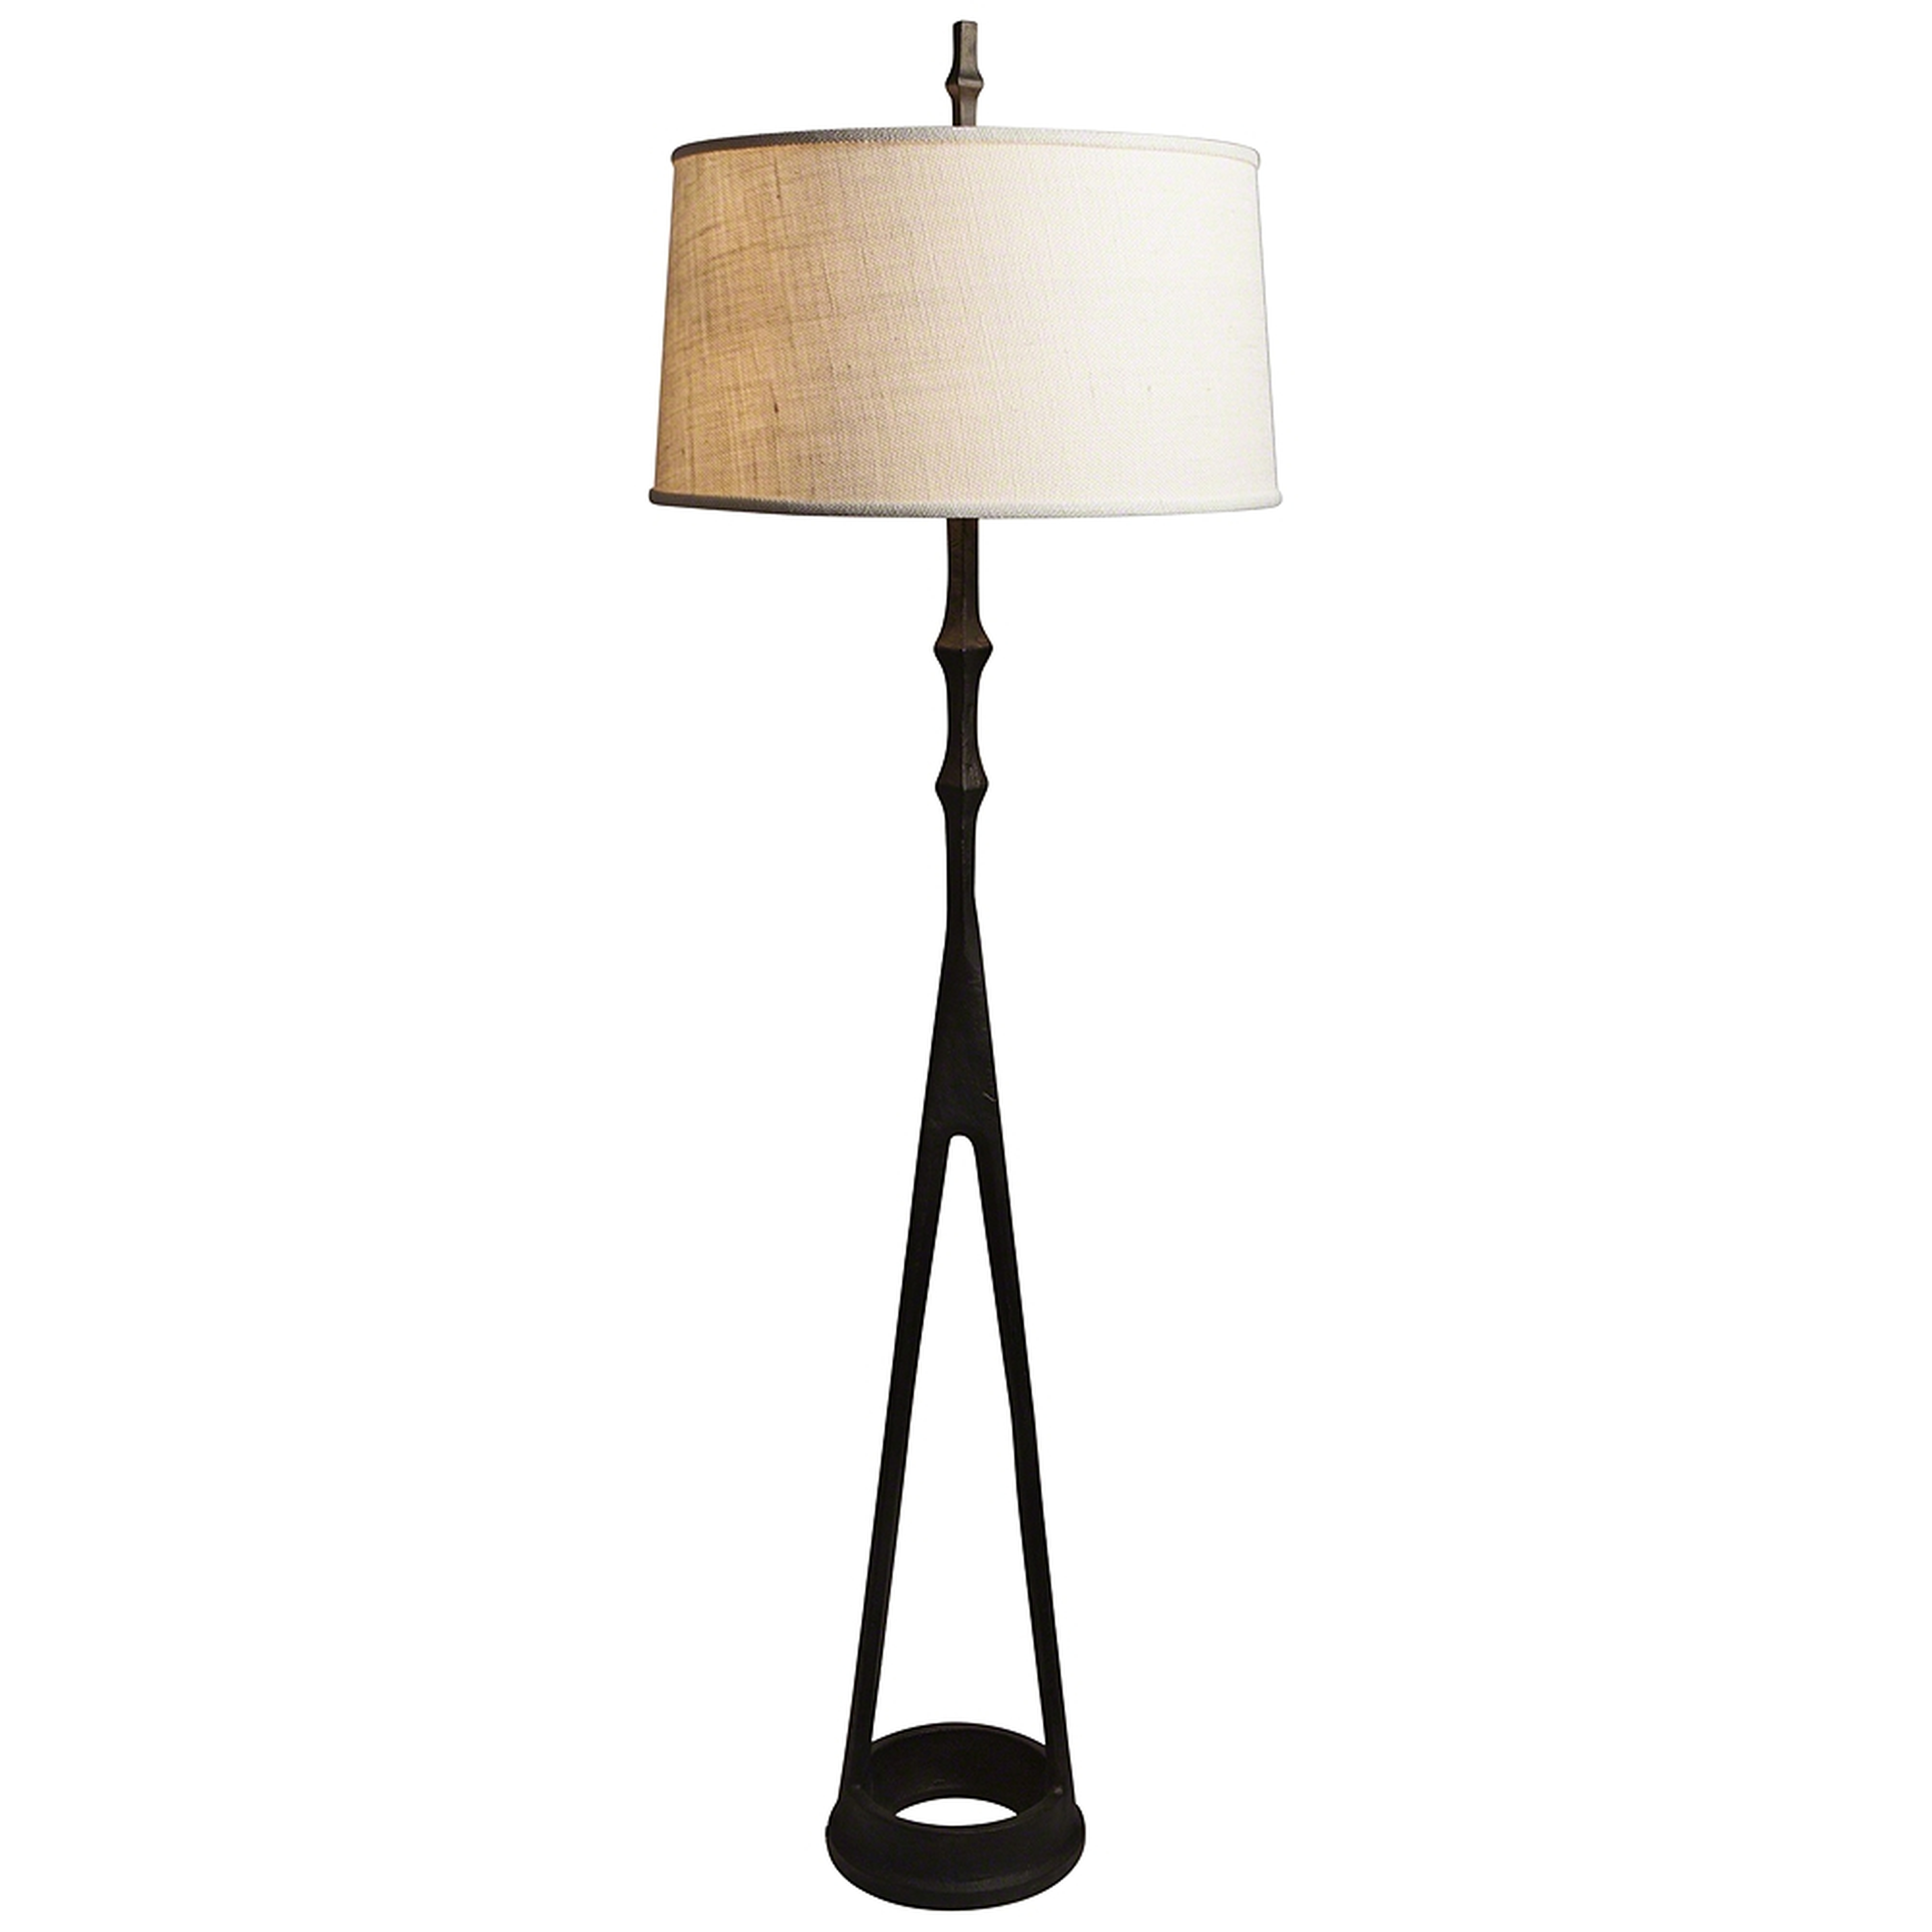 Compass Antique Bronze Floor Lamp - Style # 46Y71 - Lamps Plus